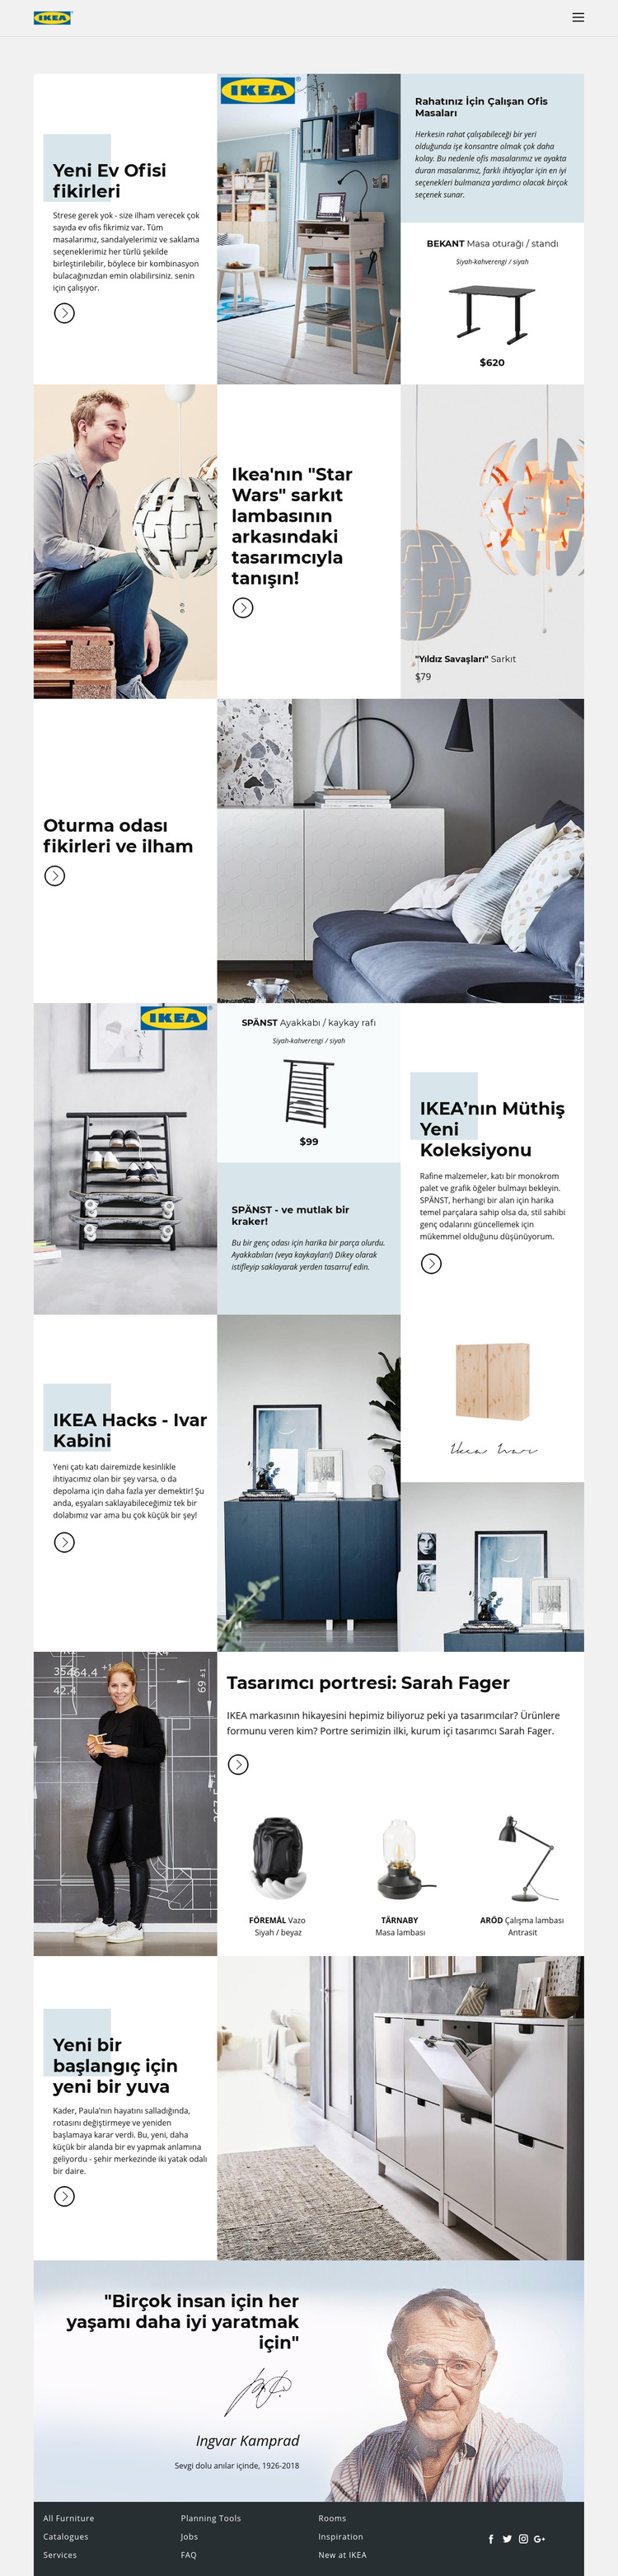 IKEA'dan İlham WordPress Teması